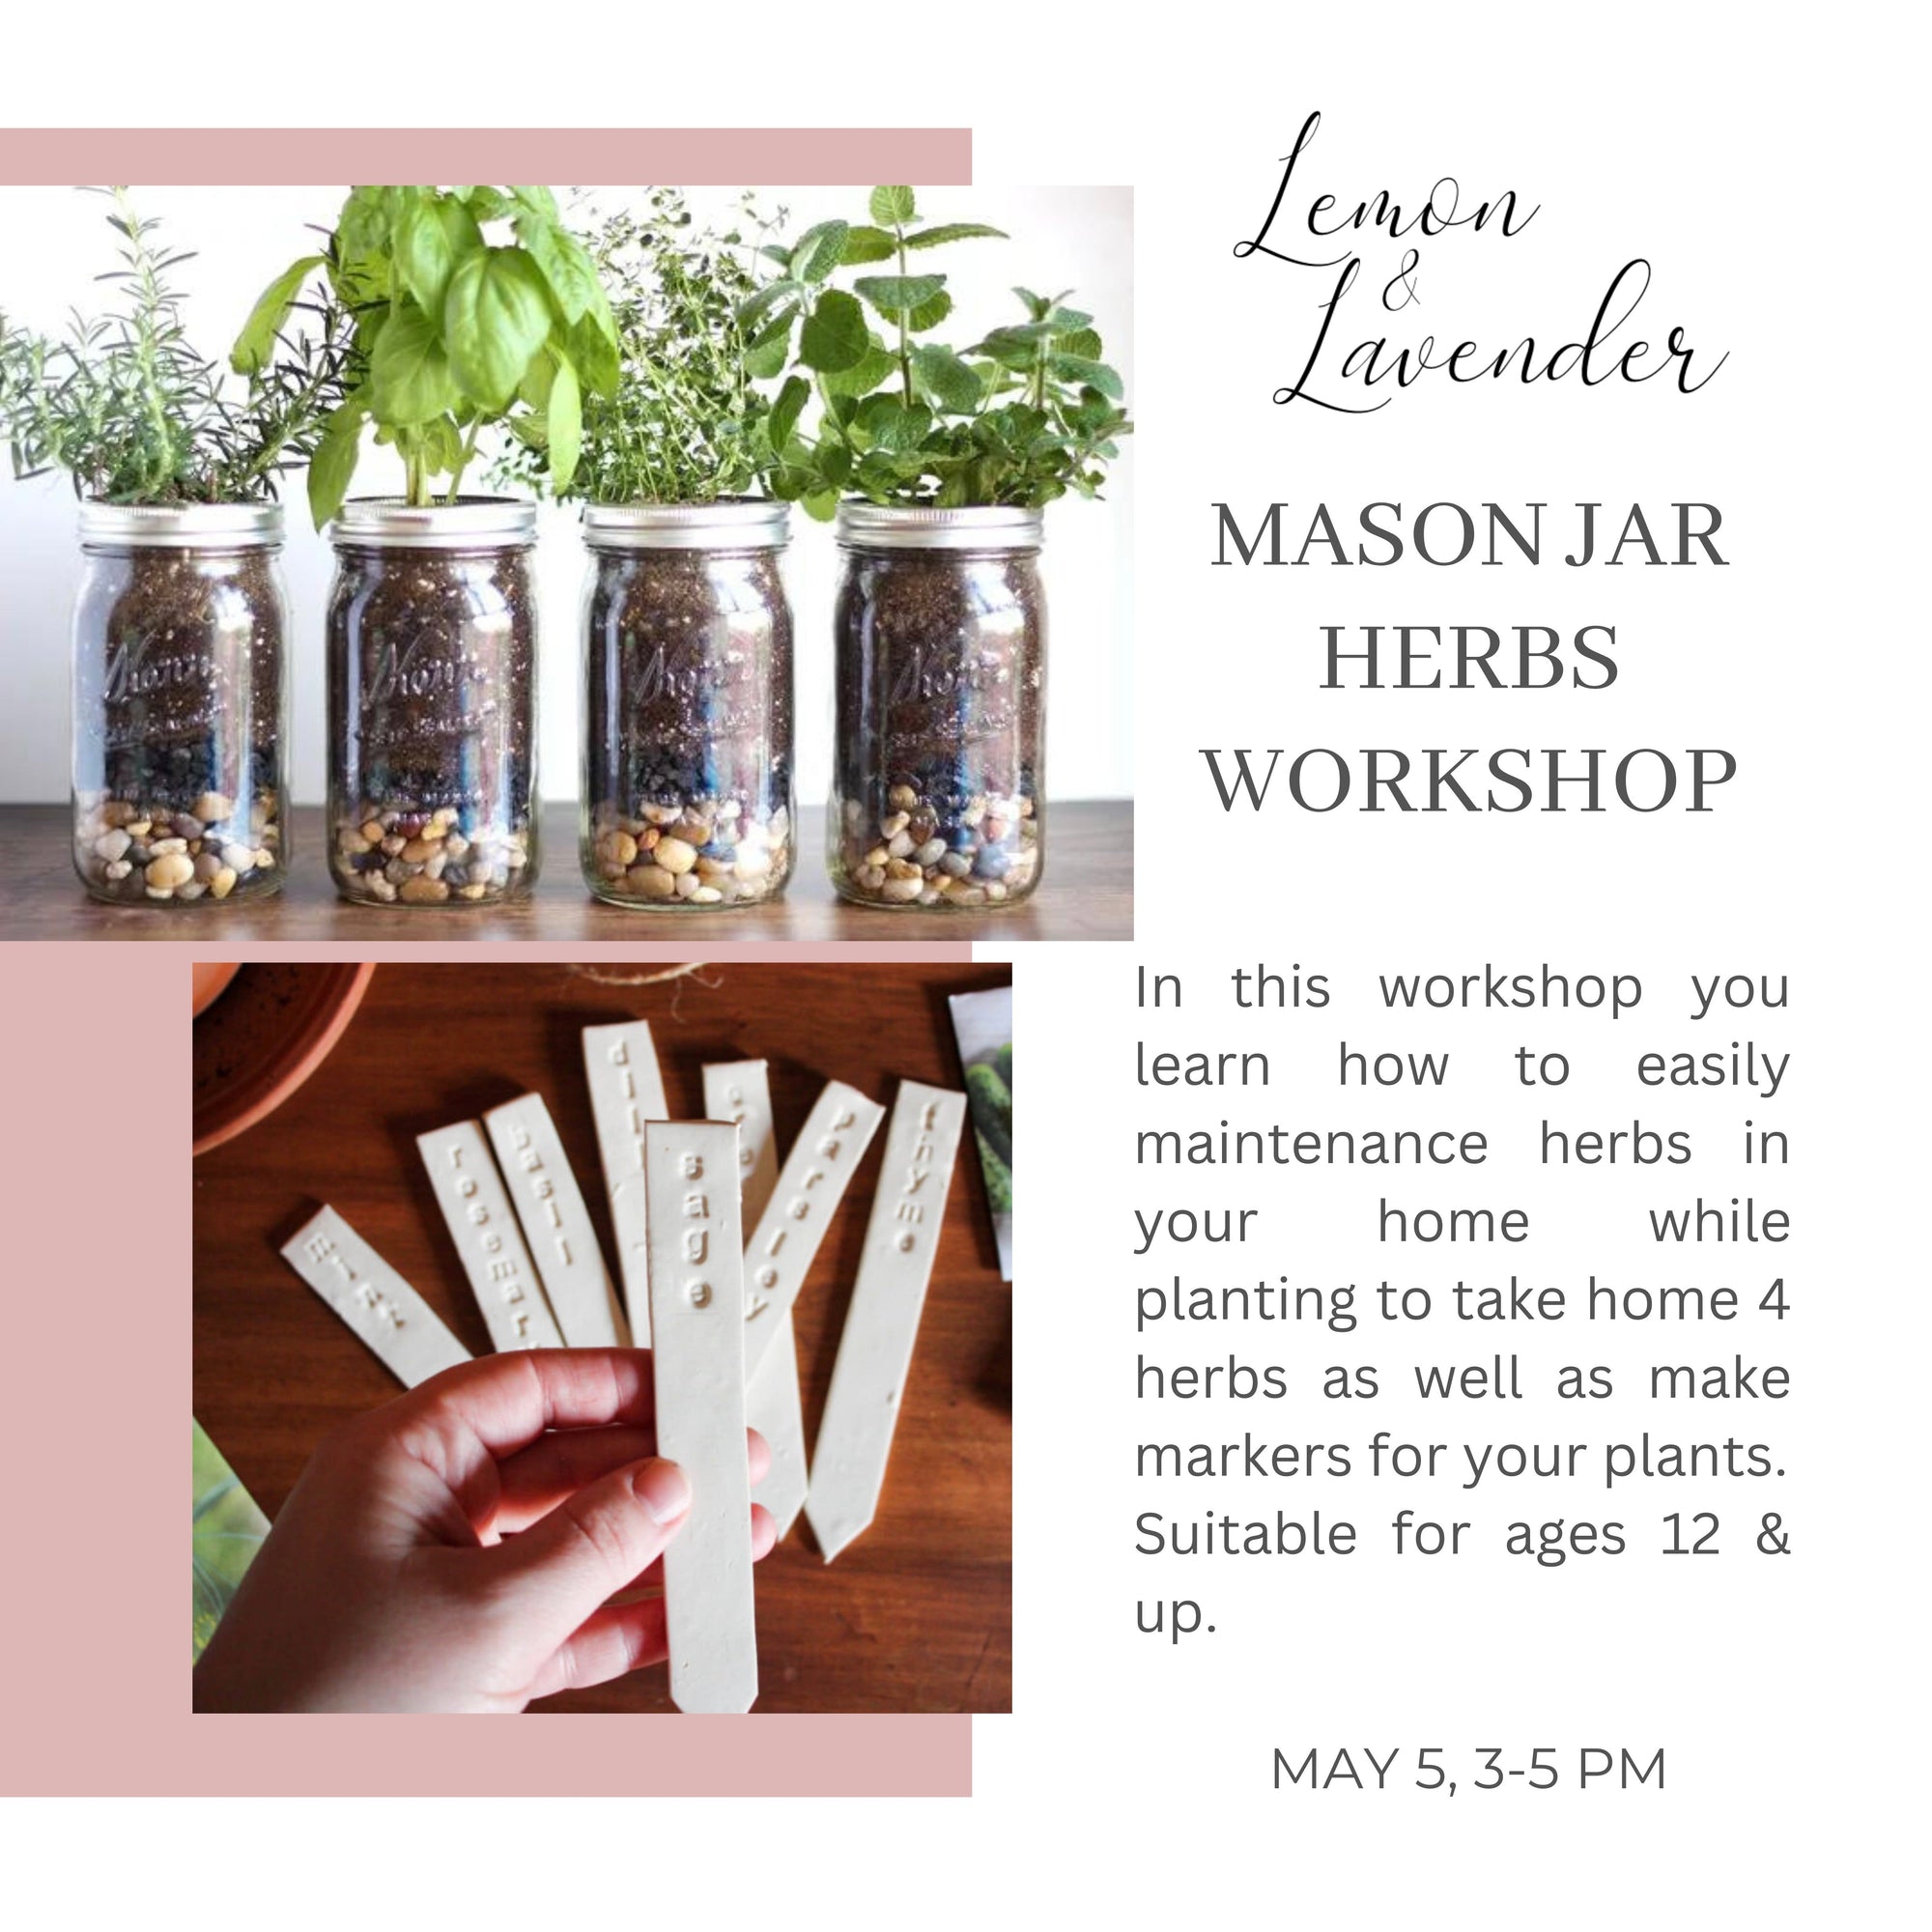 Mason Jar Herbs & Markers Workshop- May 5, 3-5 pm - Lemon & Lavender